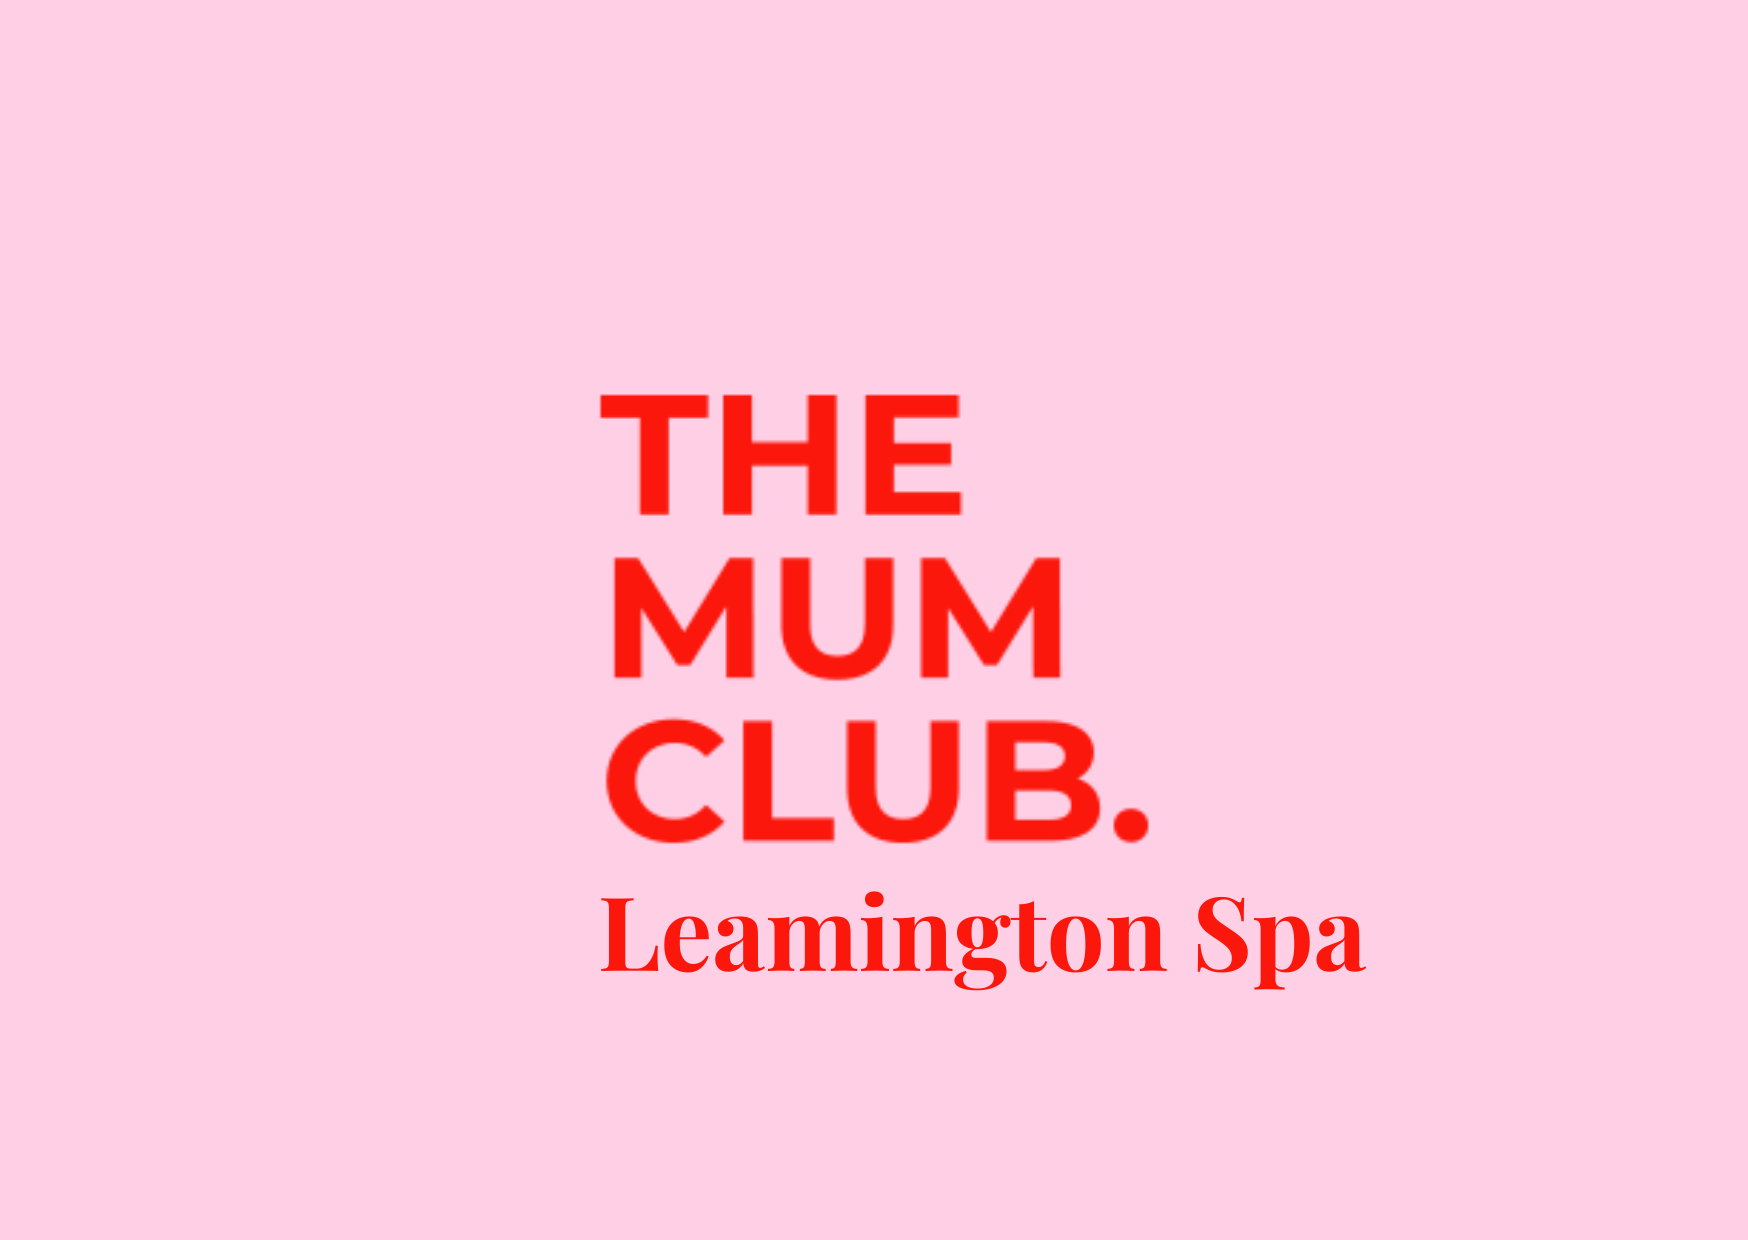 The Mum Club - Leamington Spa's logo